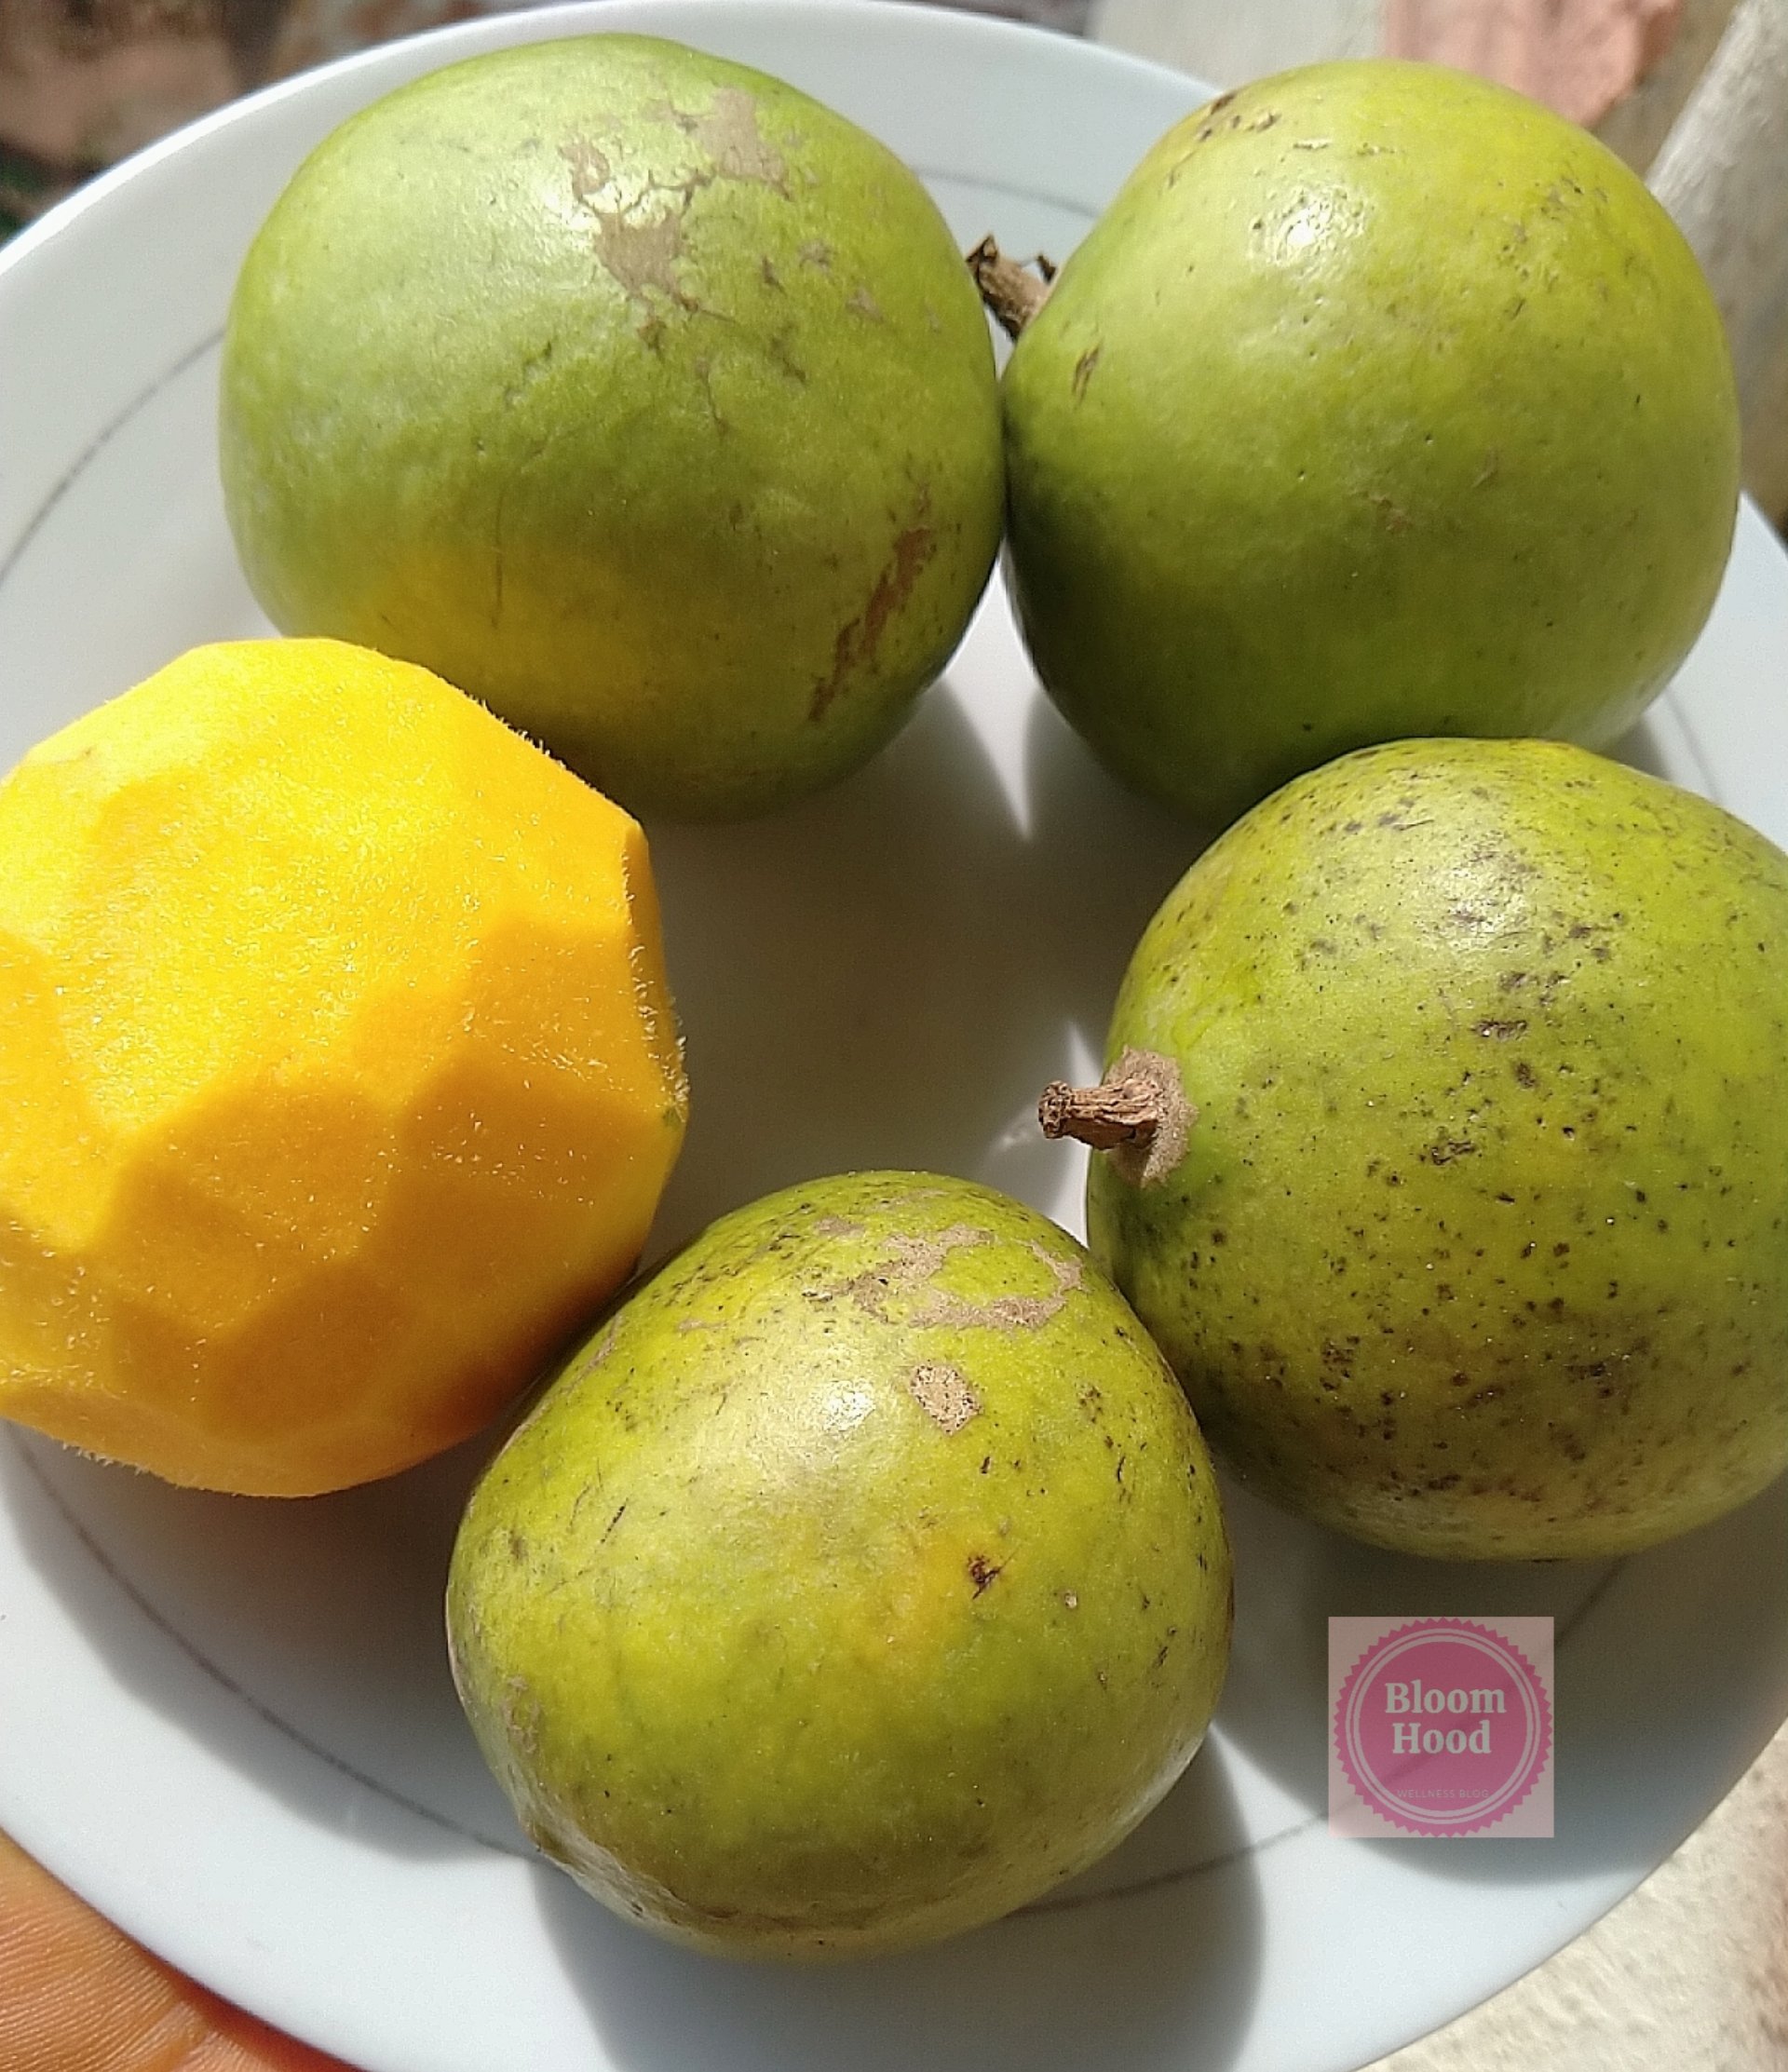 African Mango Benefits